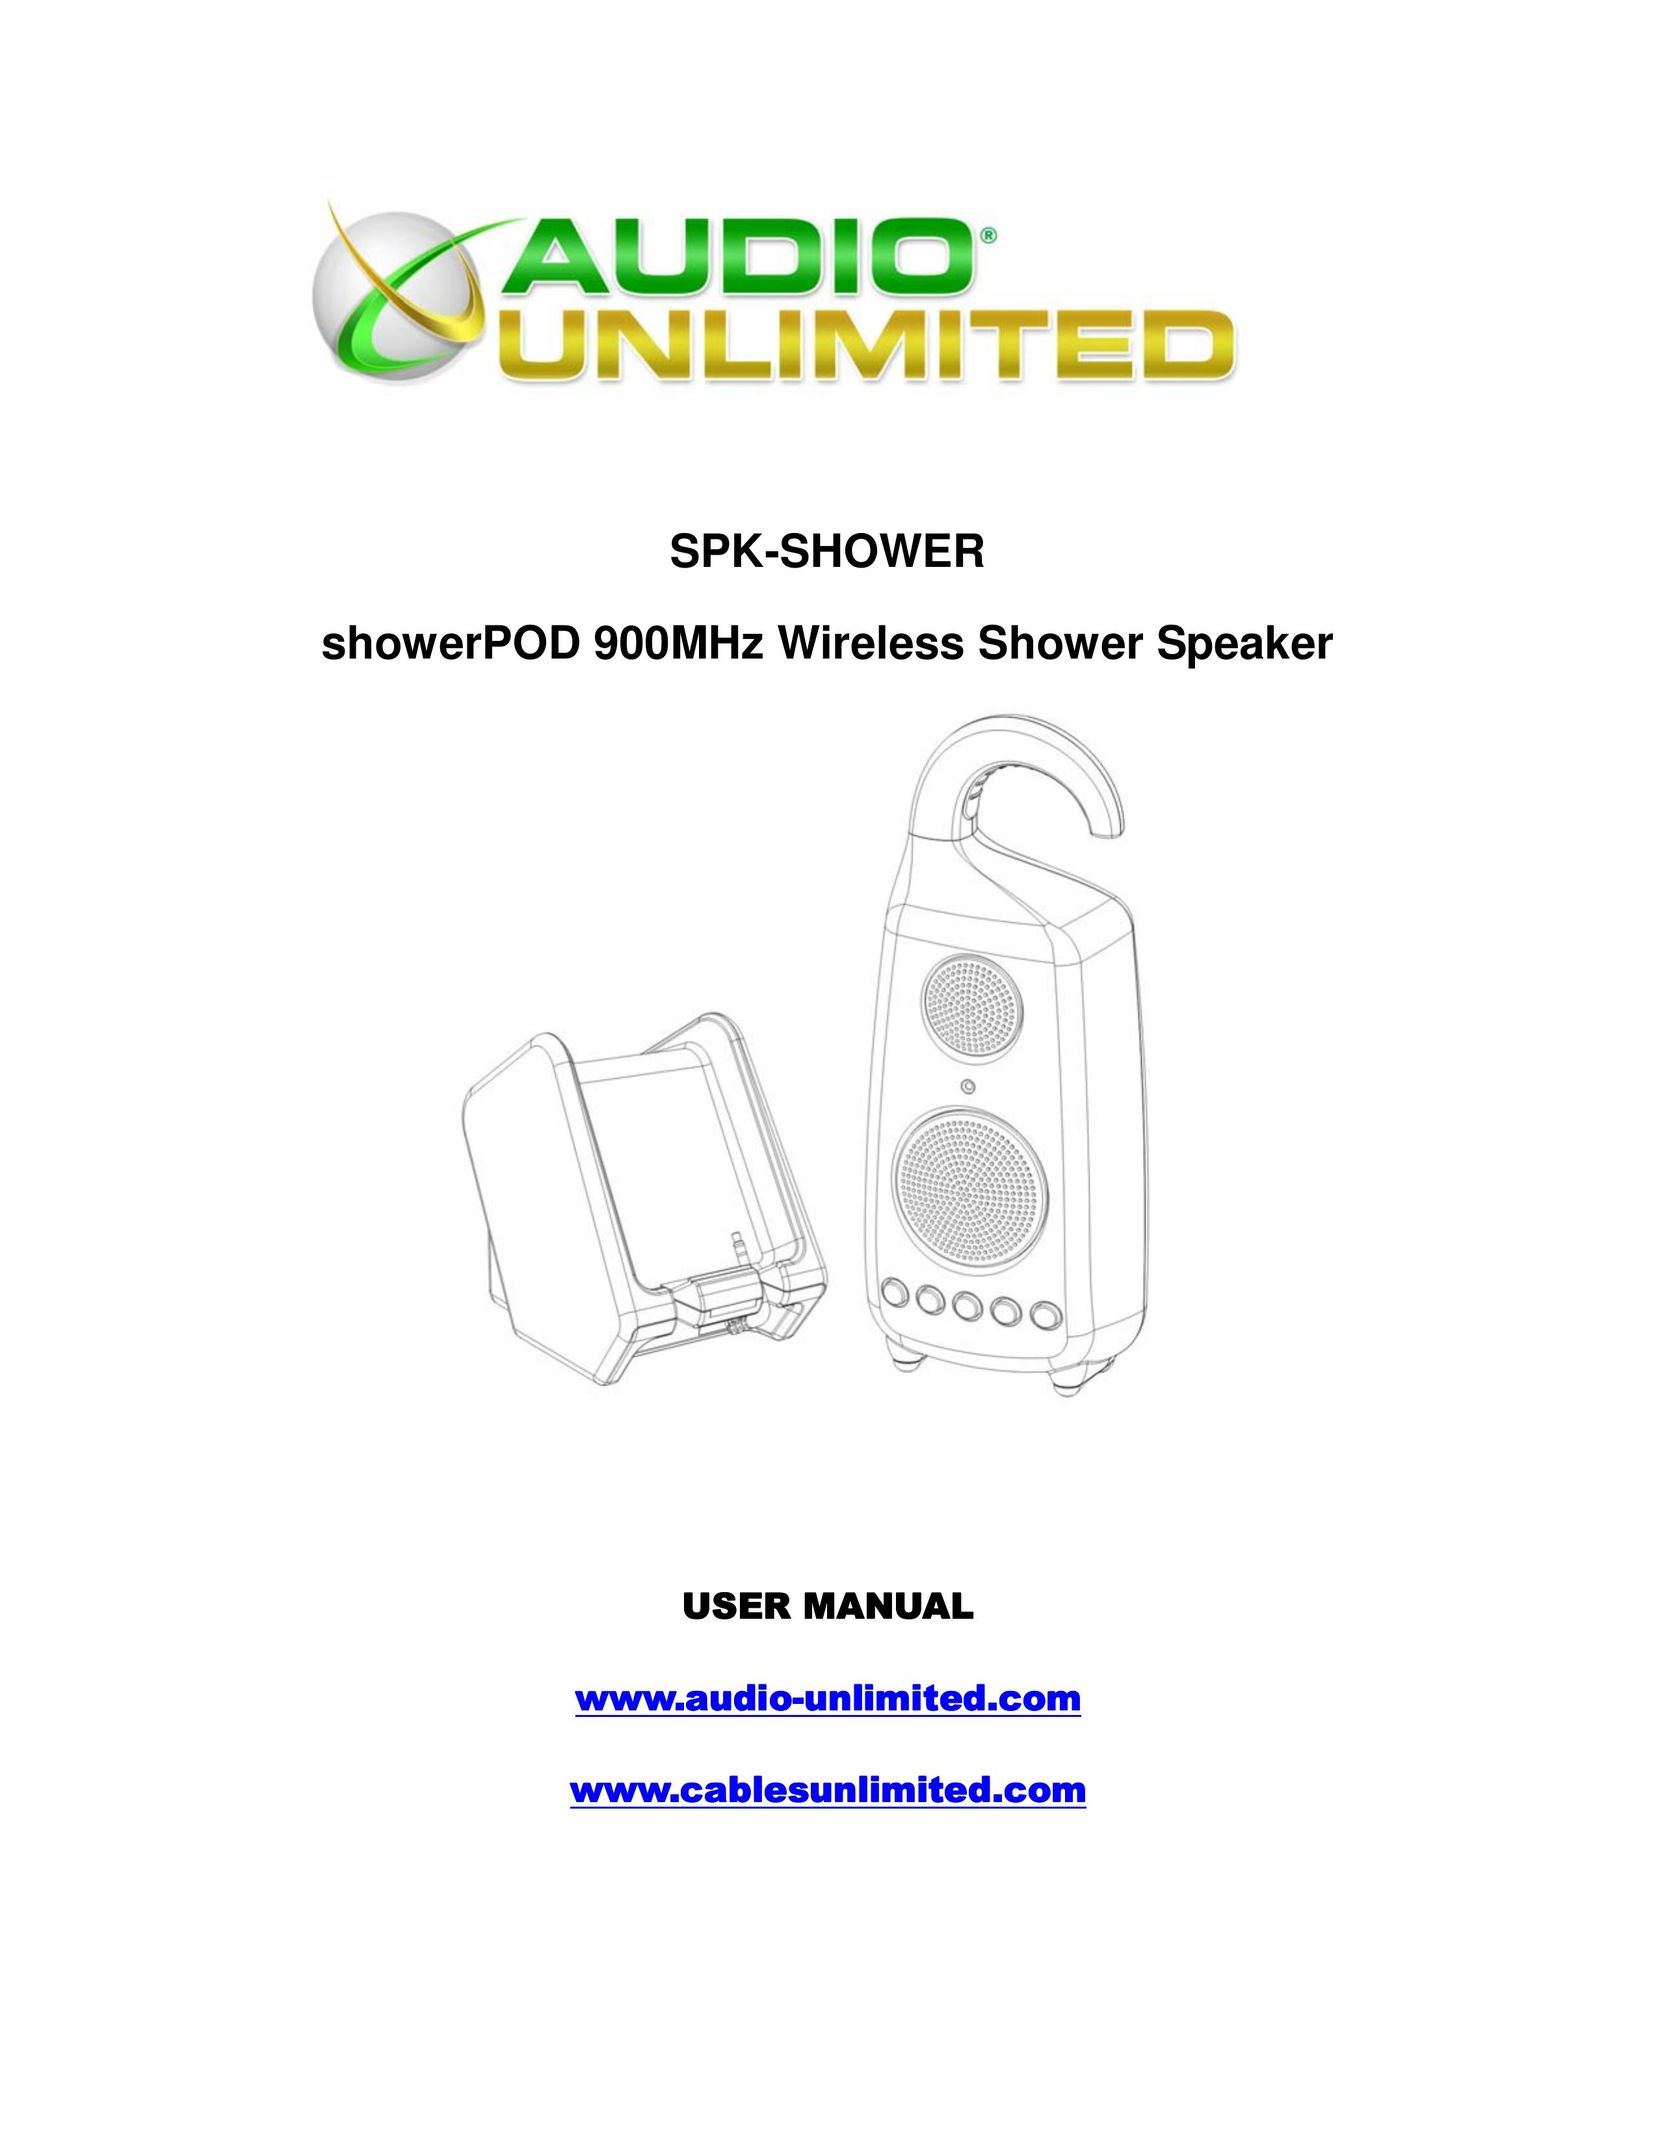 Cables Unlimited SPK-SHOWER Headphones User Manual